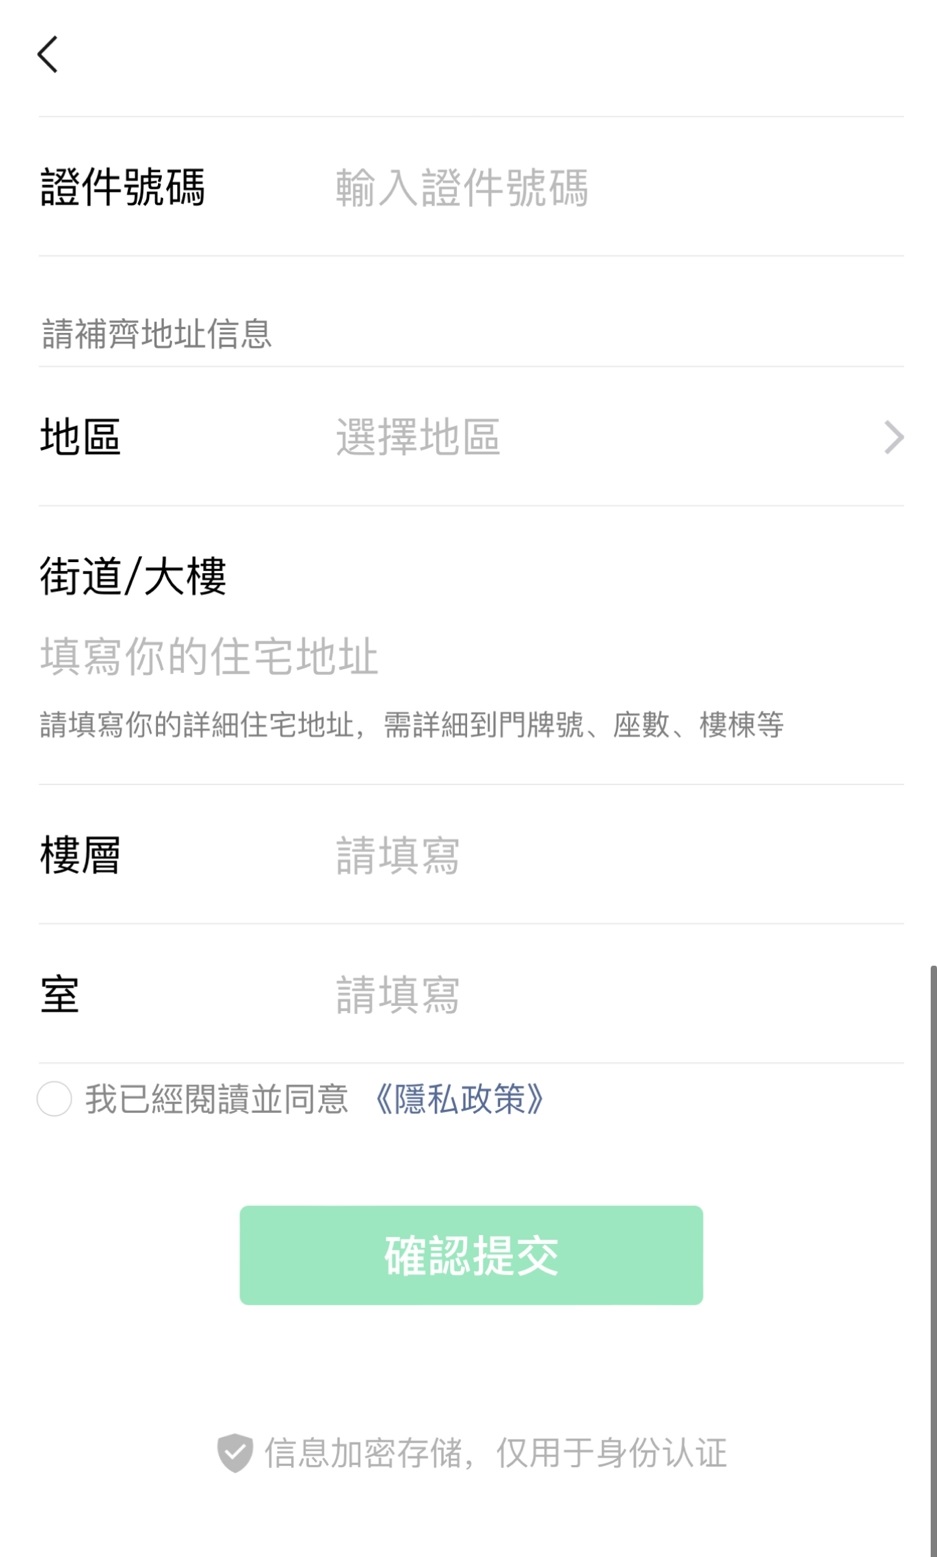 WeChat Pay HK北上支付攻略 一文睇清身份认证+增值+内地付款 (附图文教学)